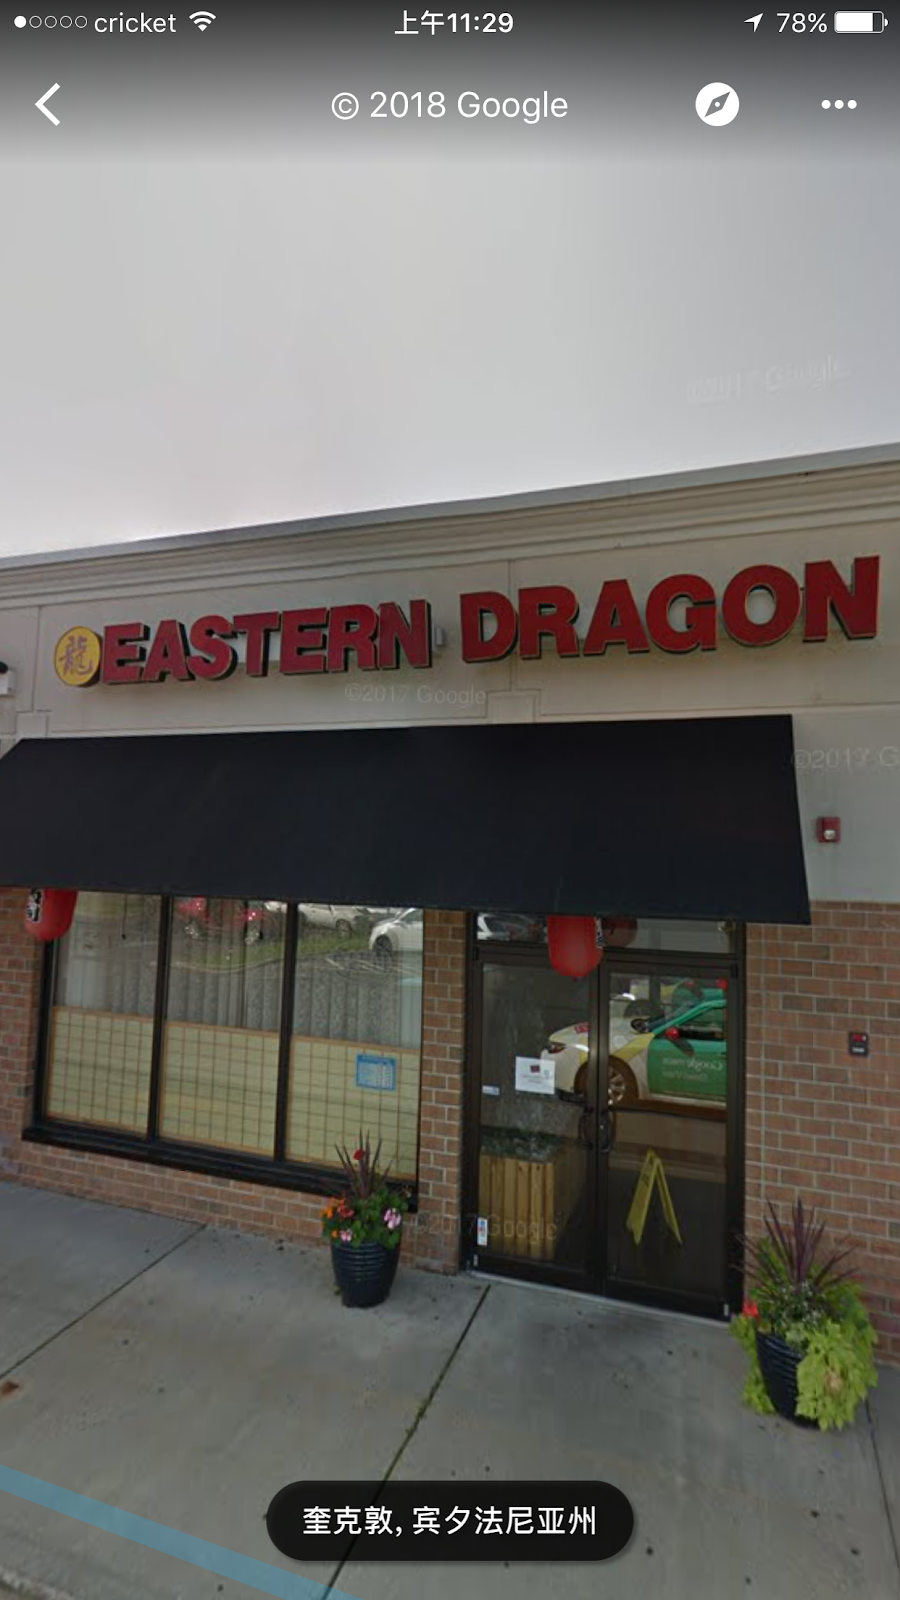 Eastern Dragon | 238-7 S West End Blvd, Quakertown, PA 18951 | Phone: (215) 538-8181